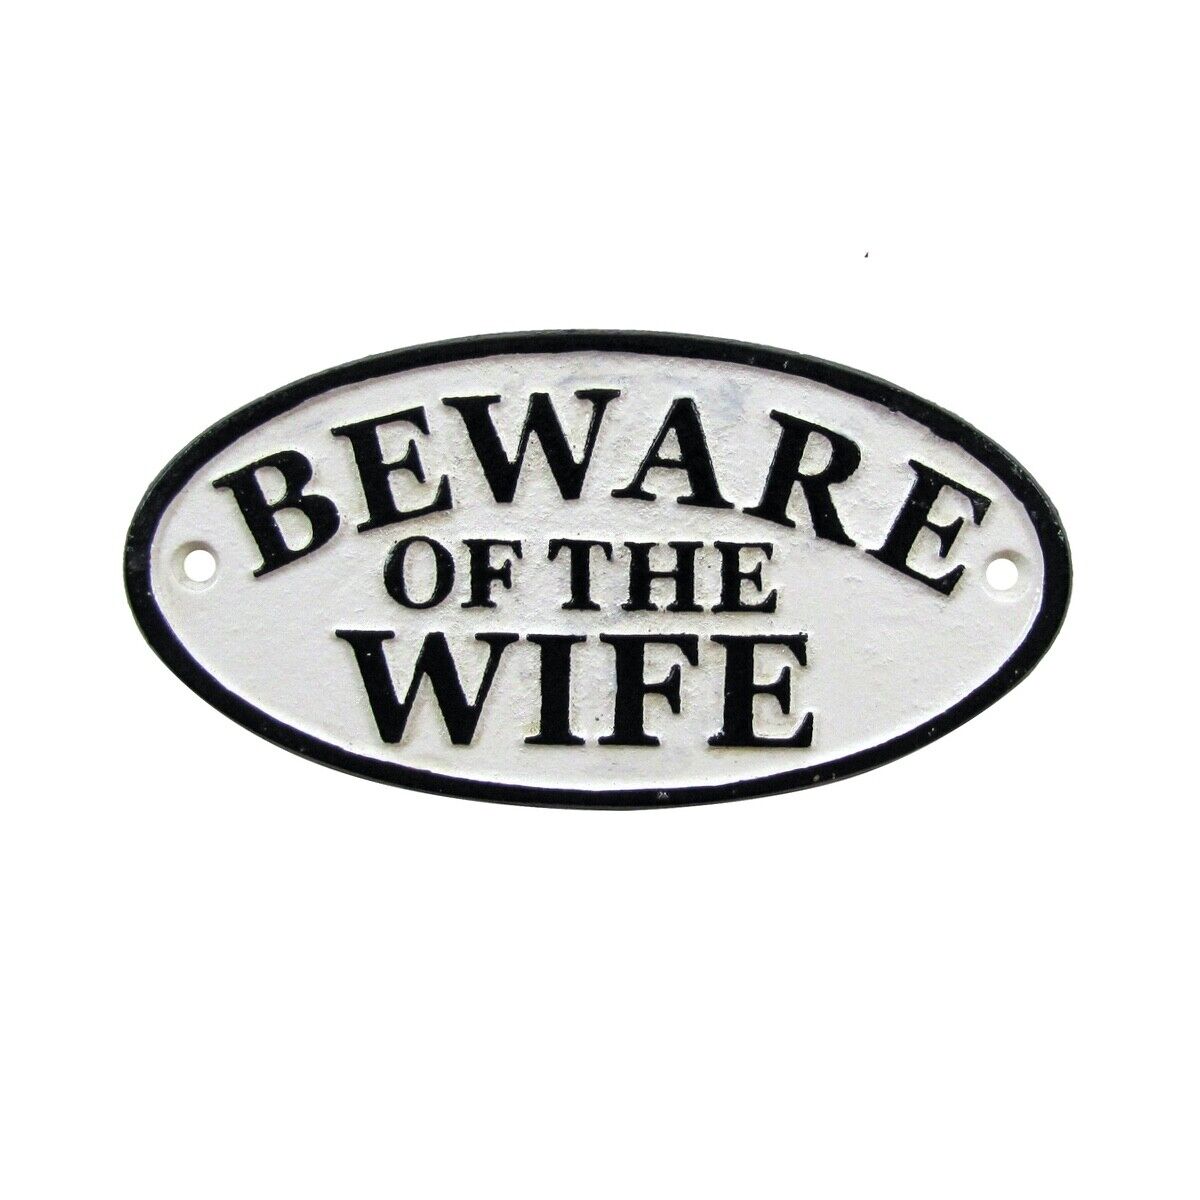 Funny Cast Iron Beware Wife Warning Wall Sign Novelty Garage Man Cave Bar Decor